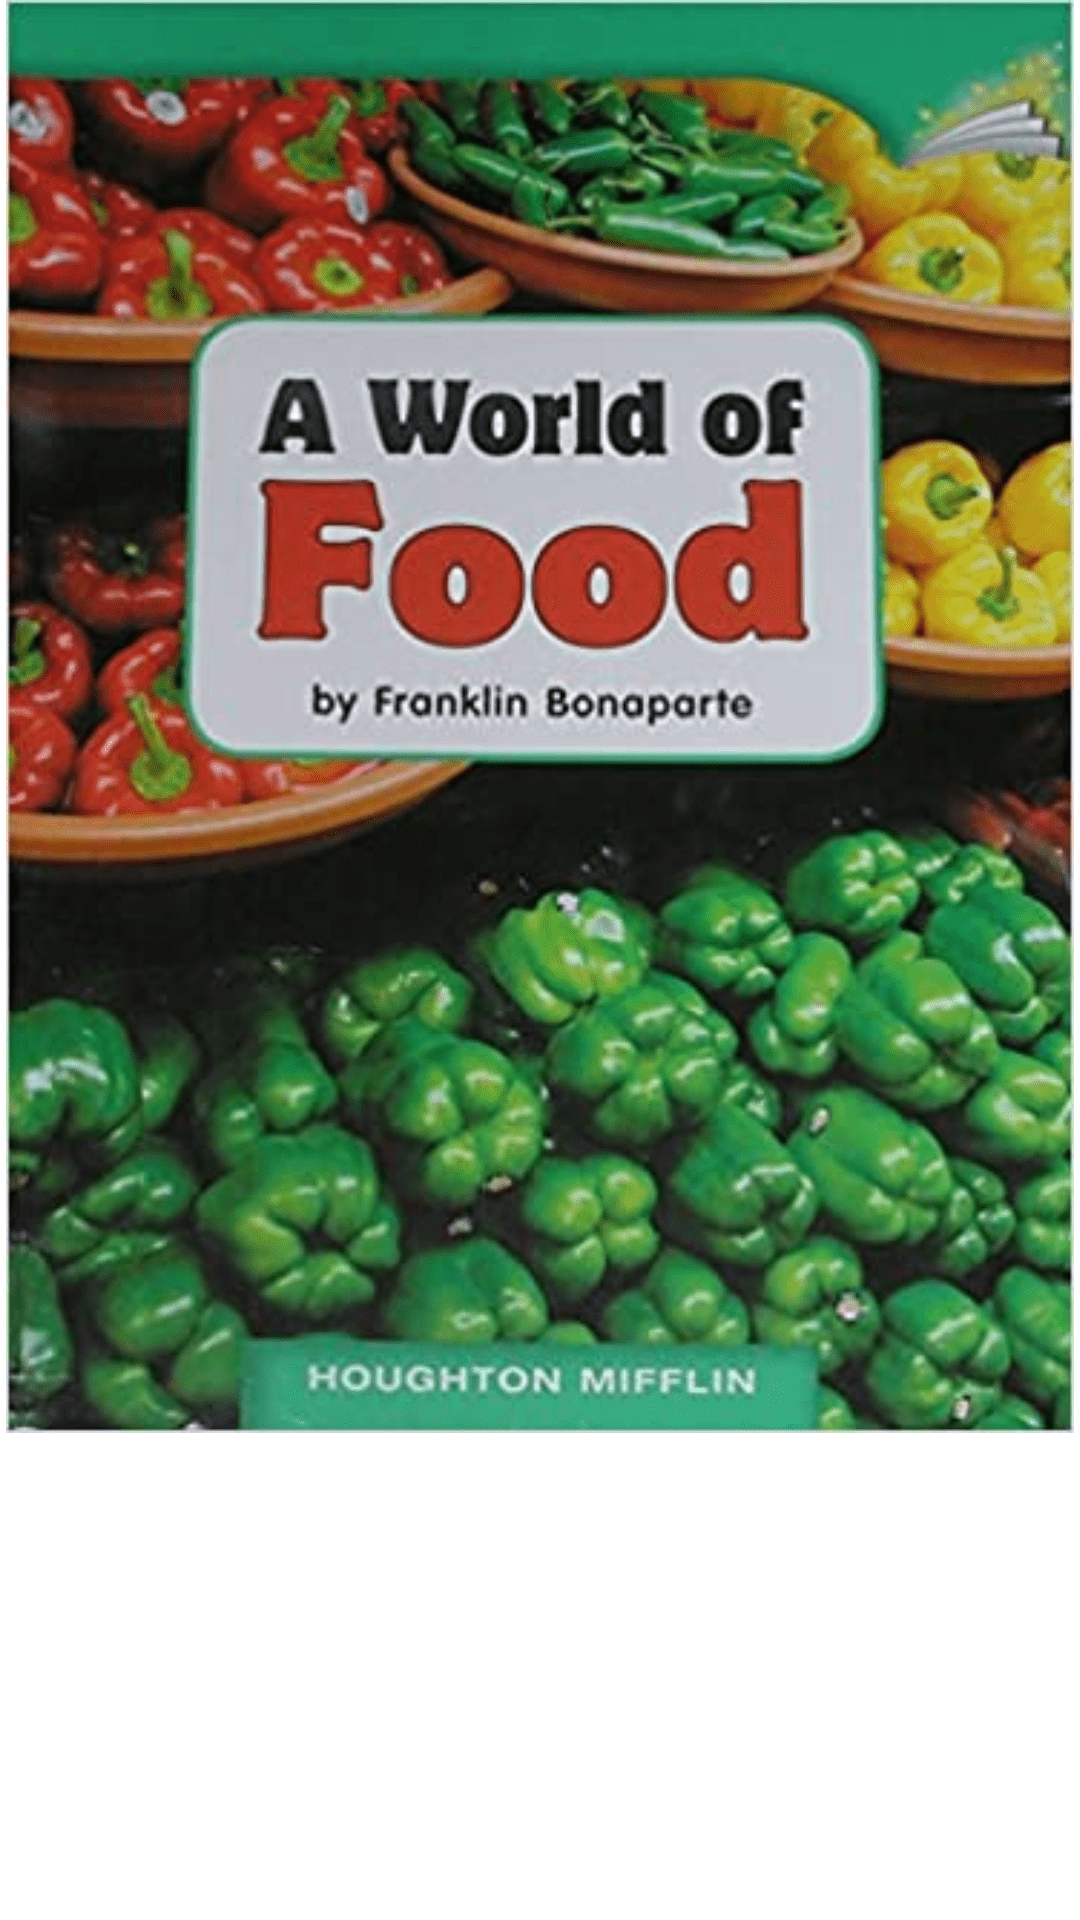 A World of Food by Franklin Bonaparte